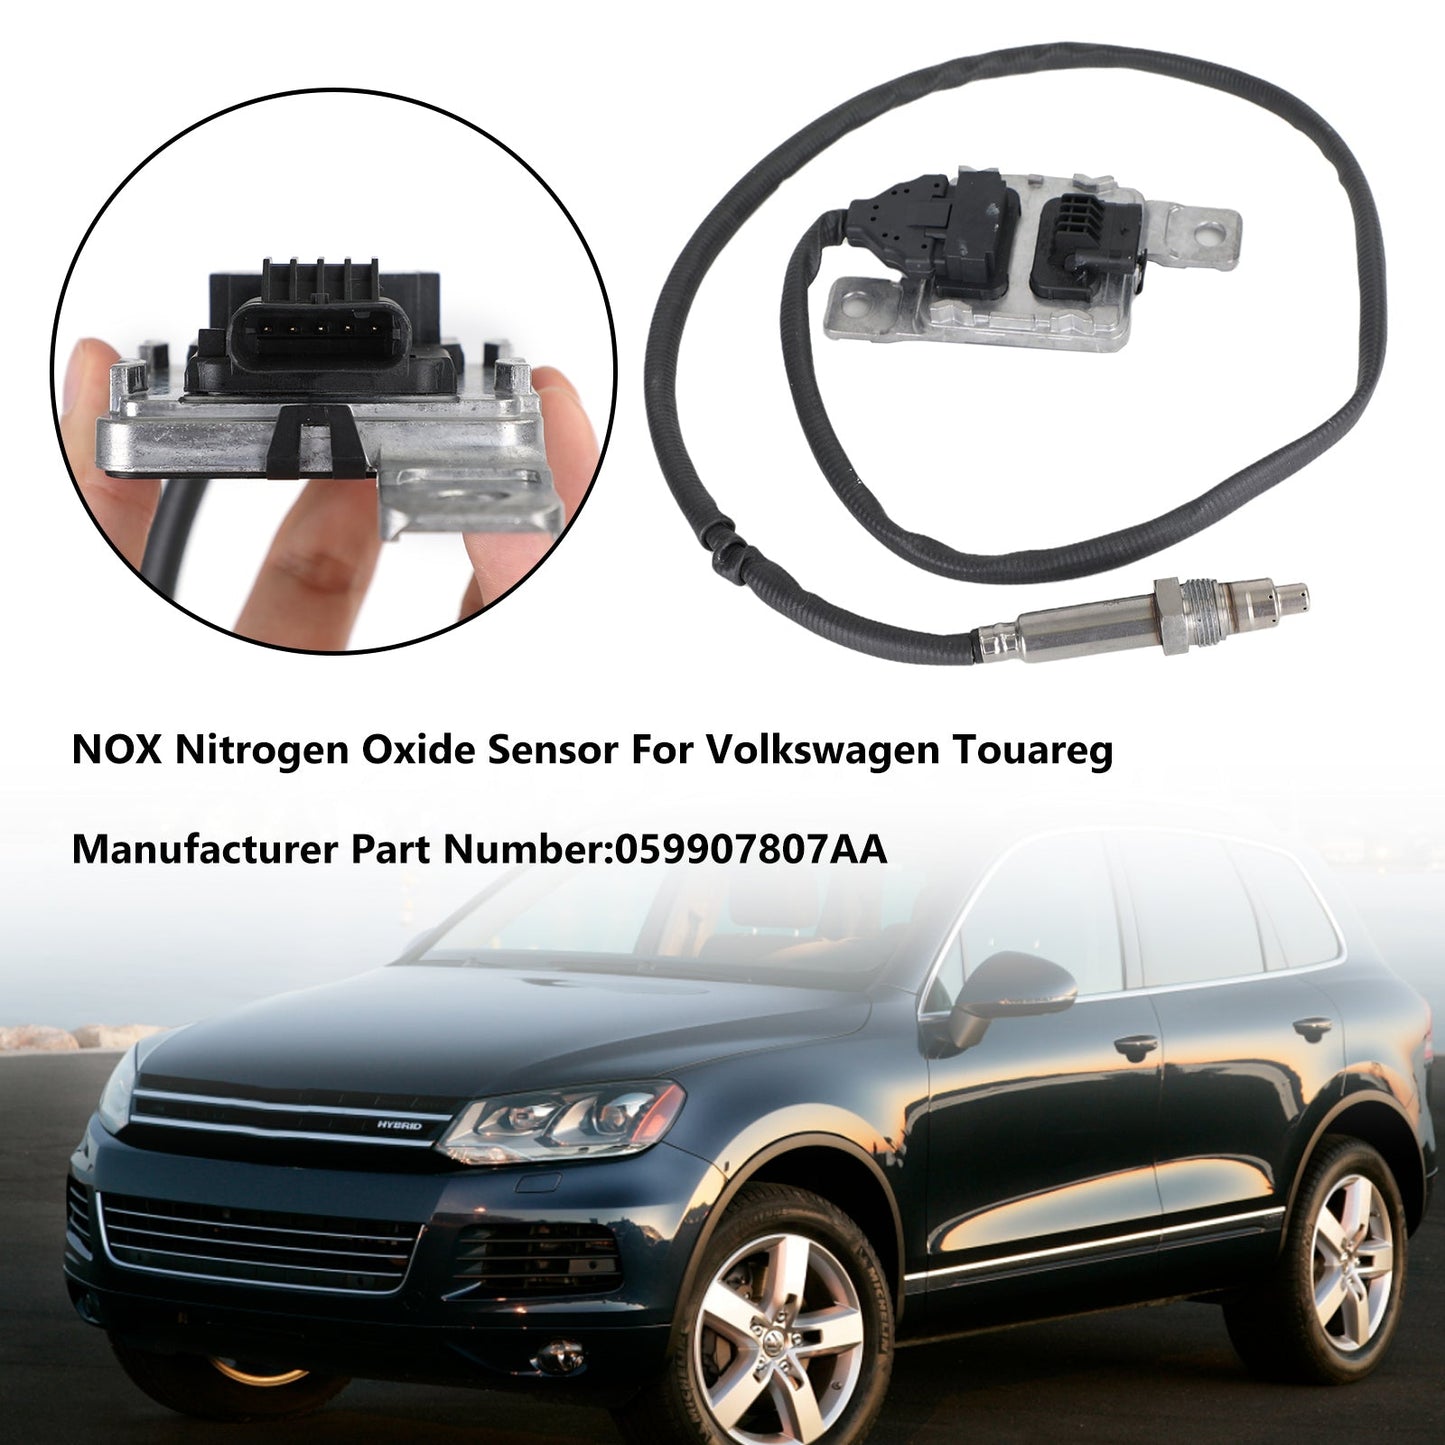 Nox-Stickstoffoxidsensor 059907807AA für Volkswagen Touareg 2015-2018 Generikum